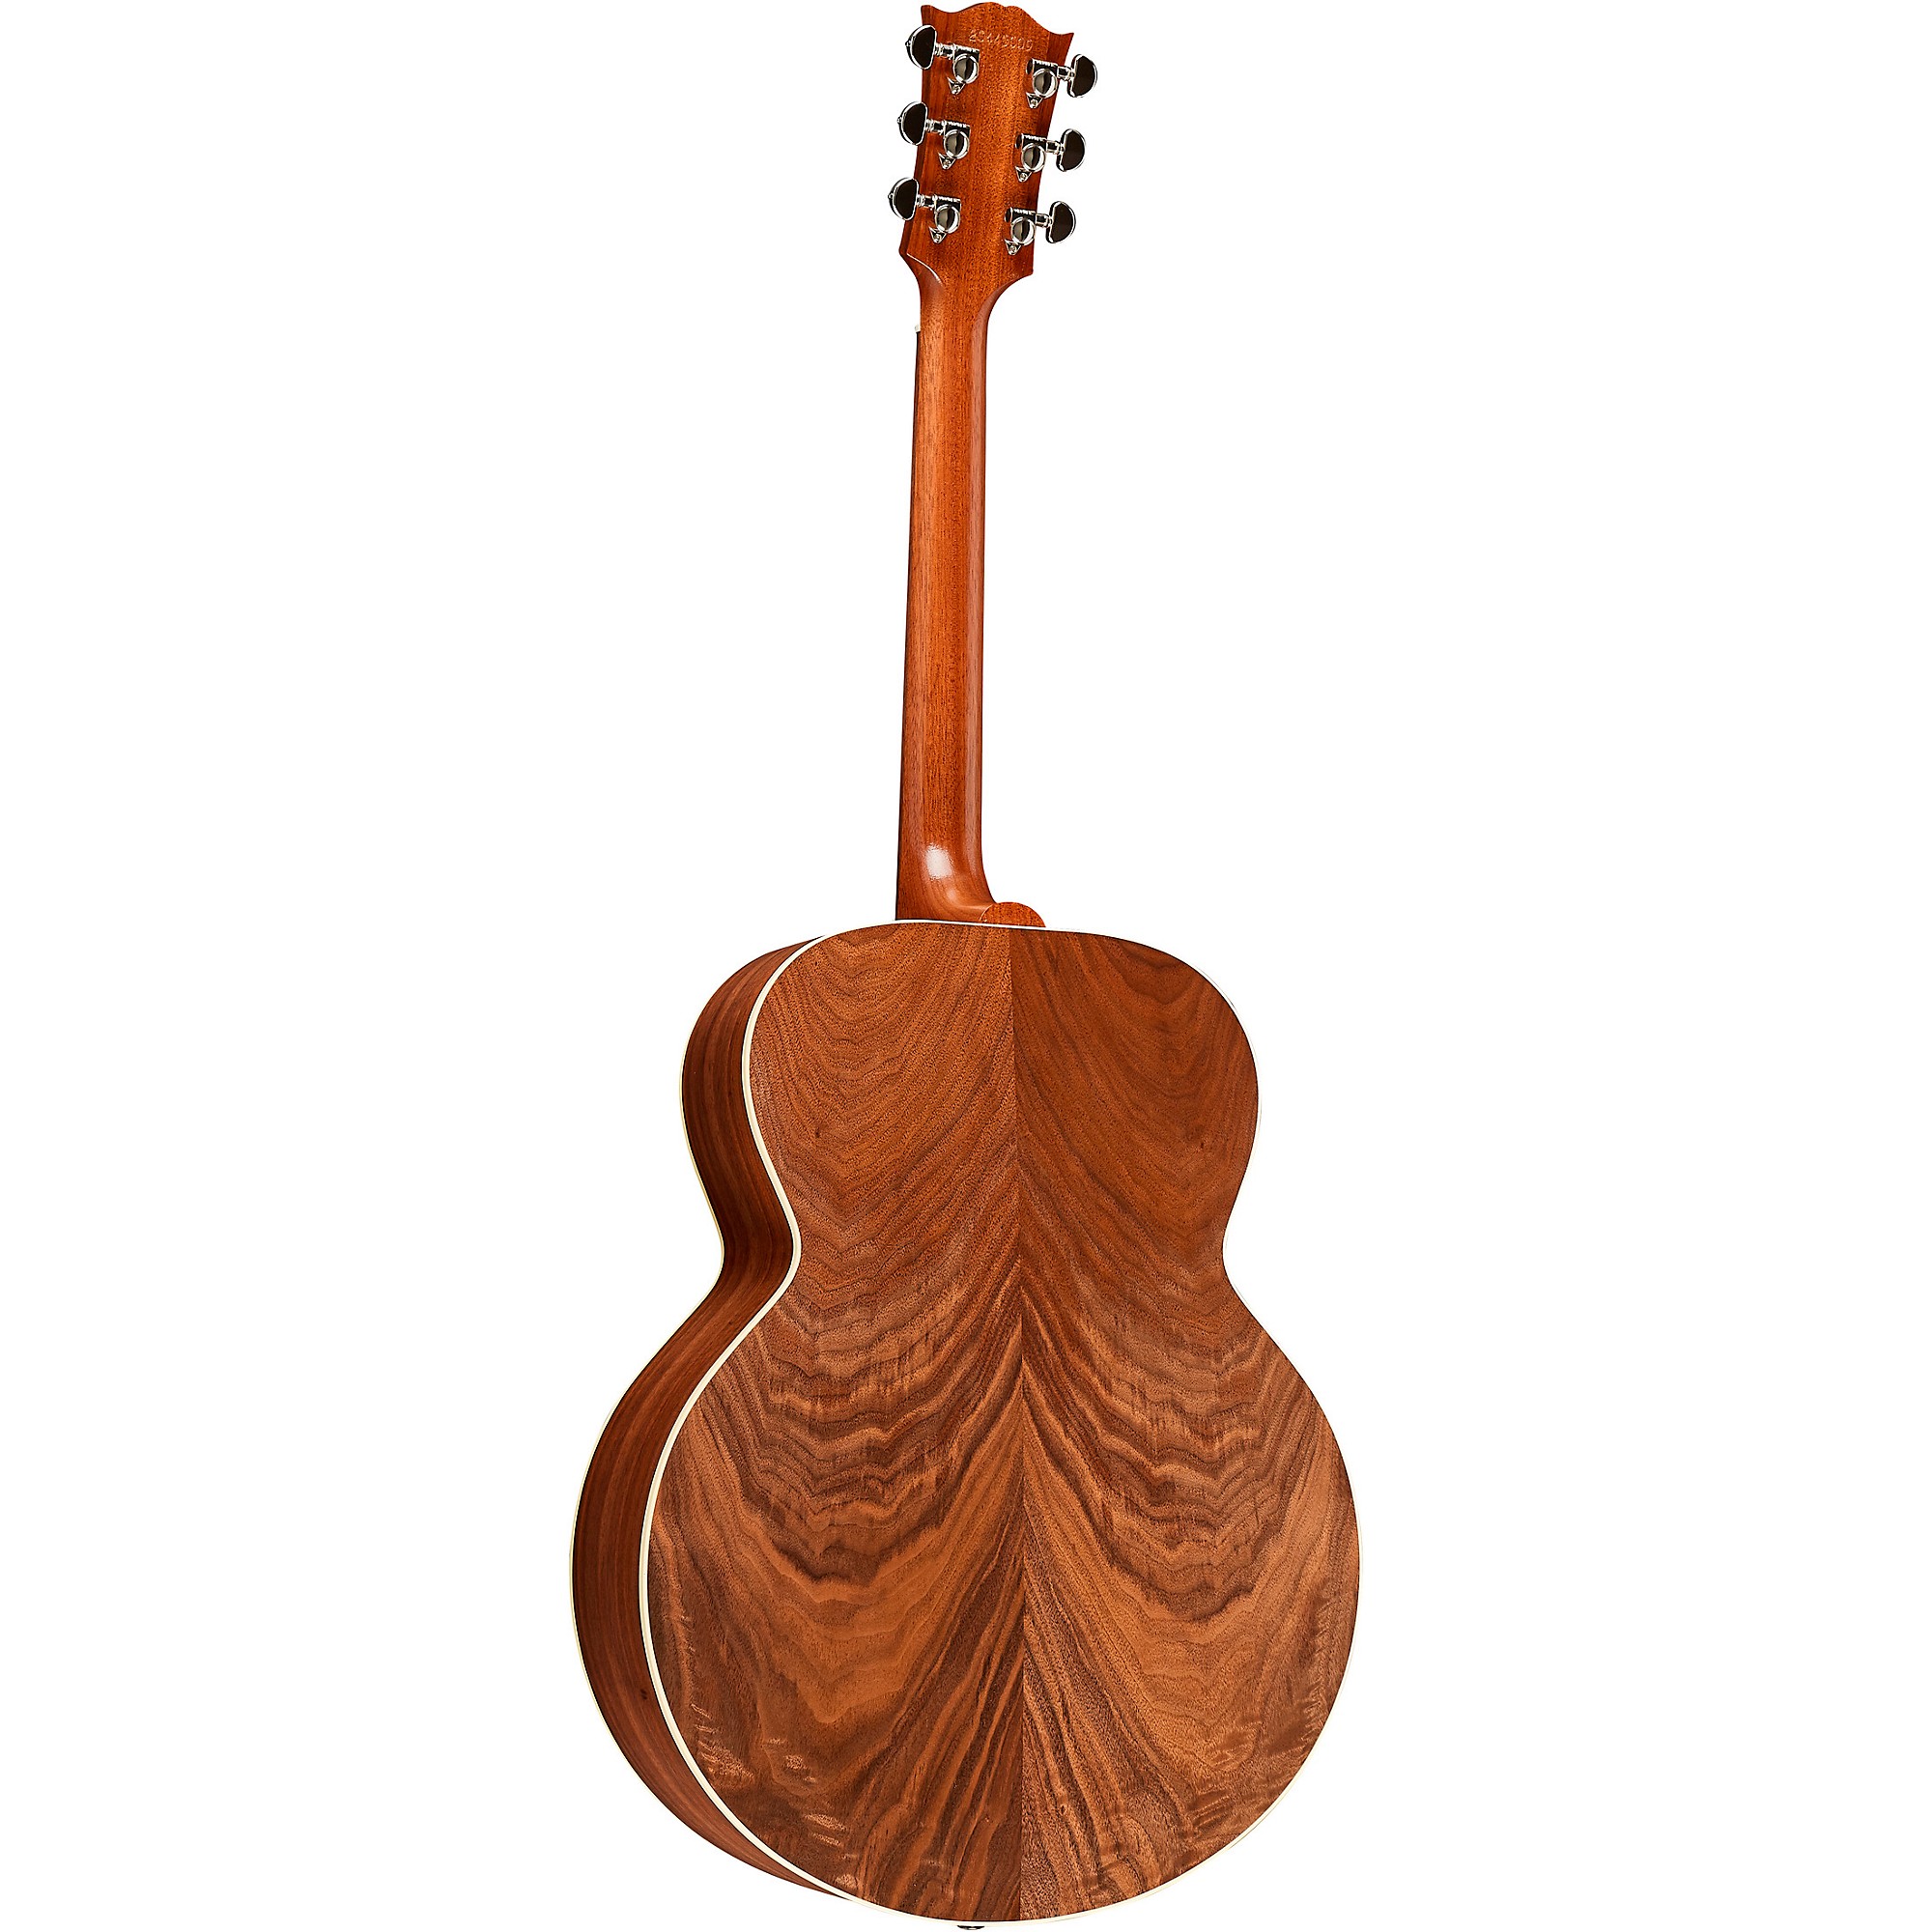 Акустически-электрическая гитара Gibson SJ-200 Studio Walnut Natural акустически электрическая гитара gibson sj 200 studio rosewood antique natural